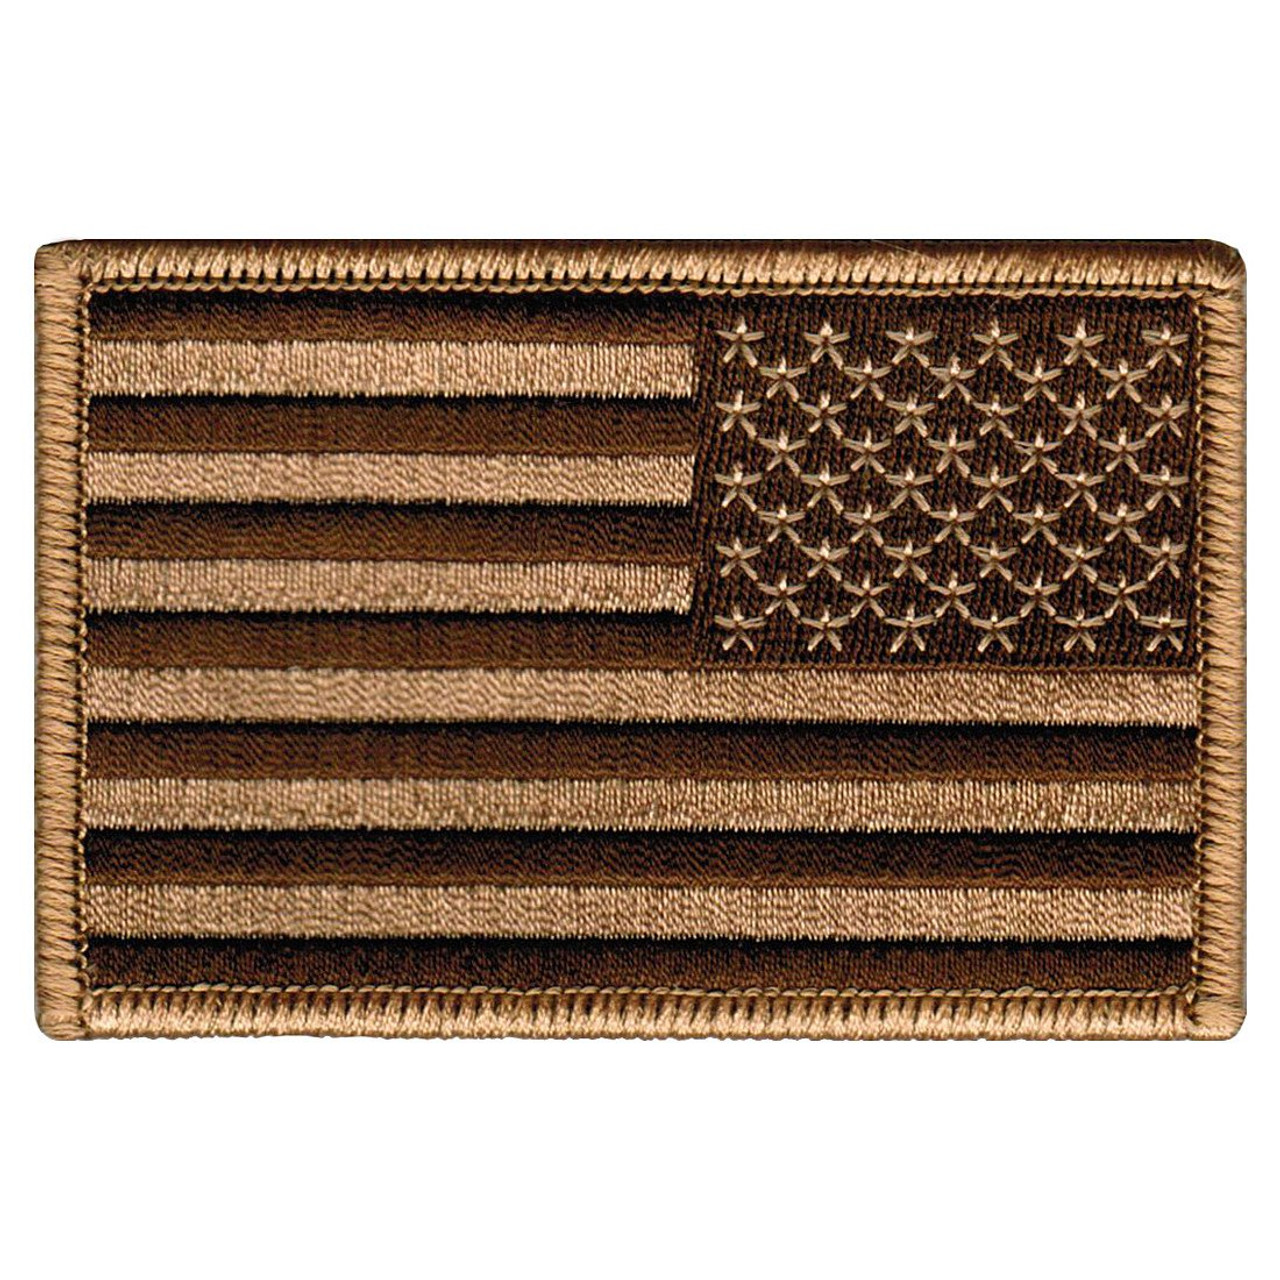 American Flag Velcro Patch (Tan)